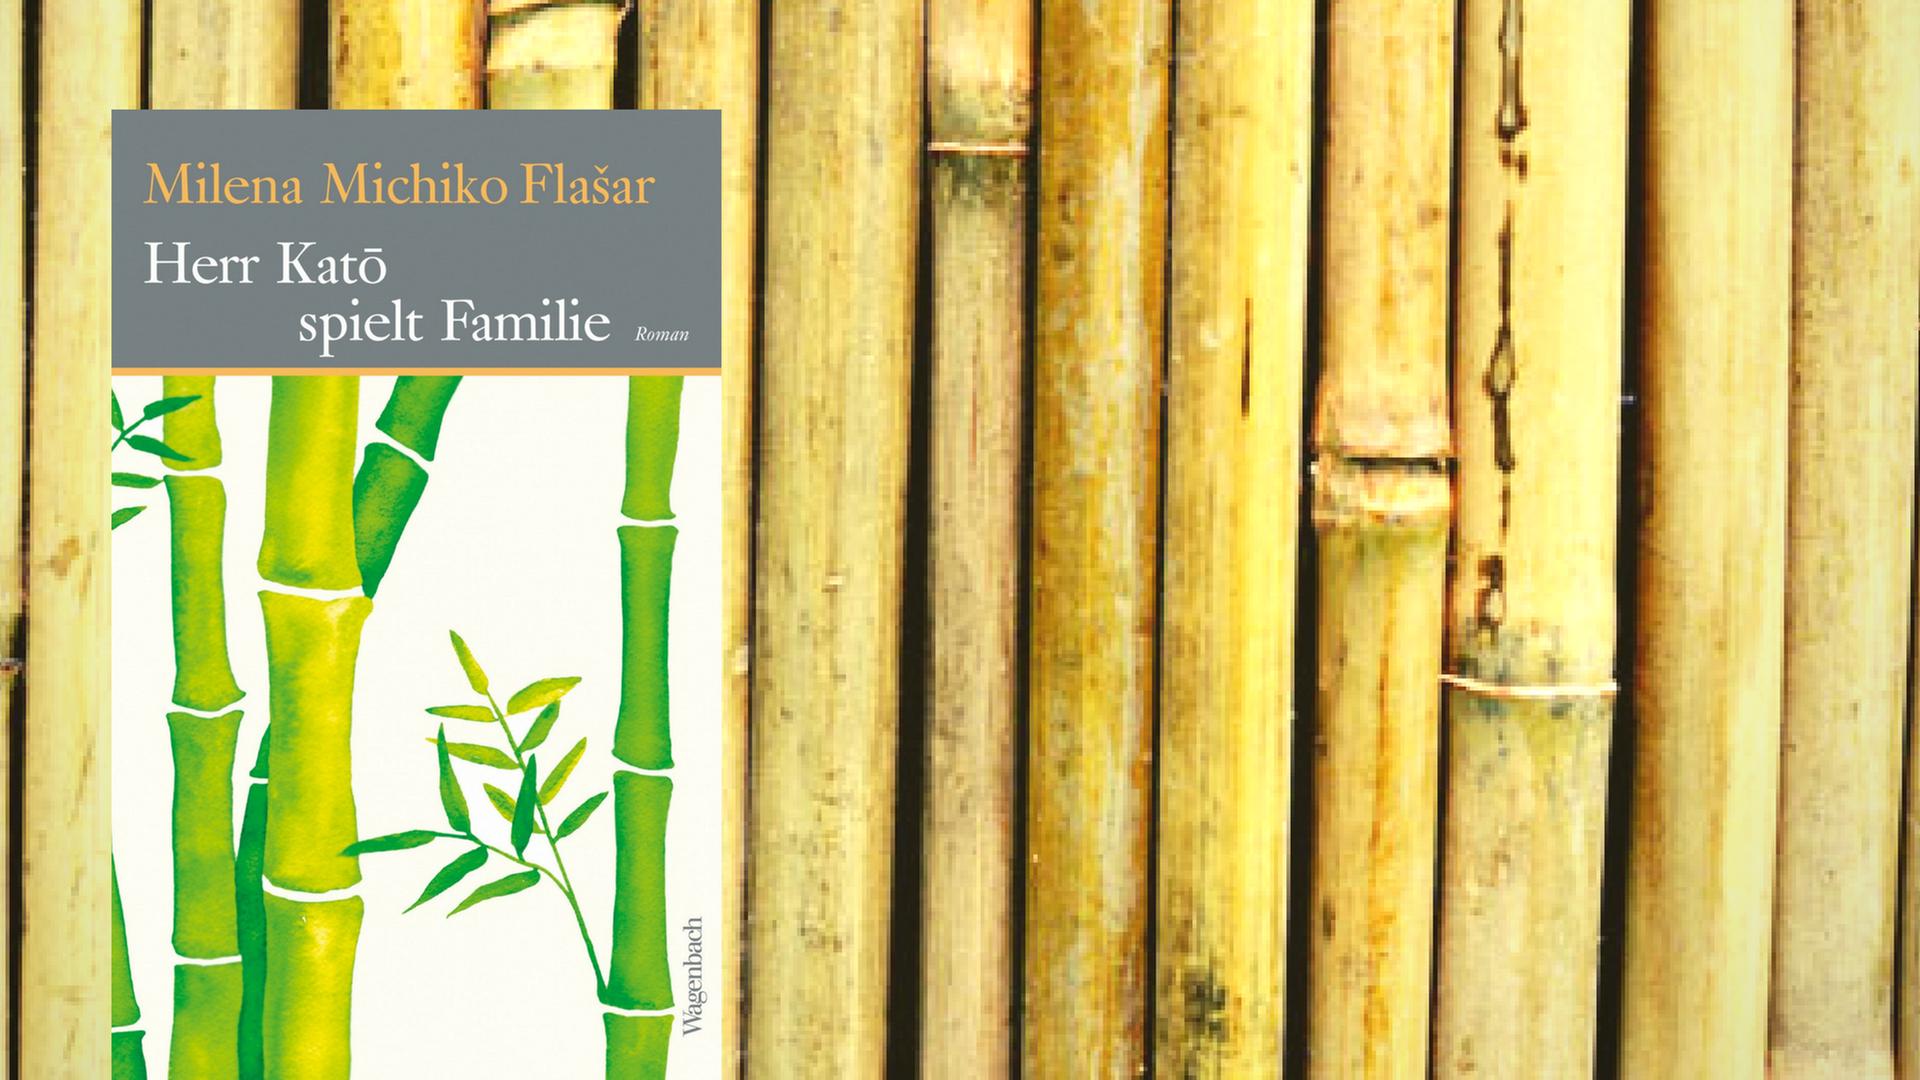 Buchcover: Milena Michiko Flašar: "Herr Katō spielt Familie"